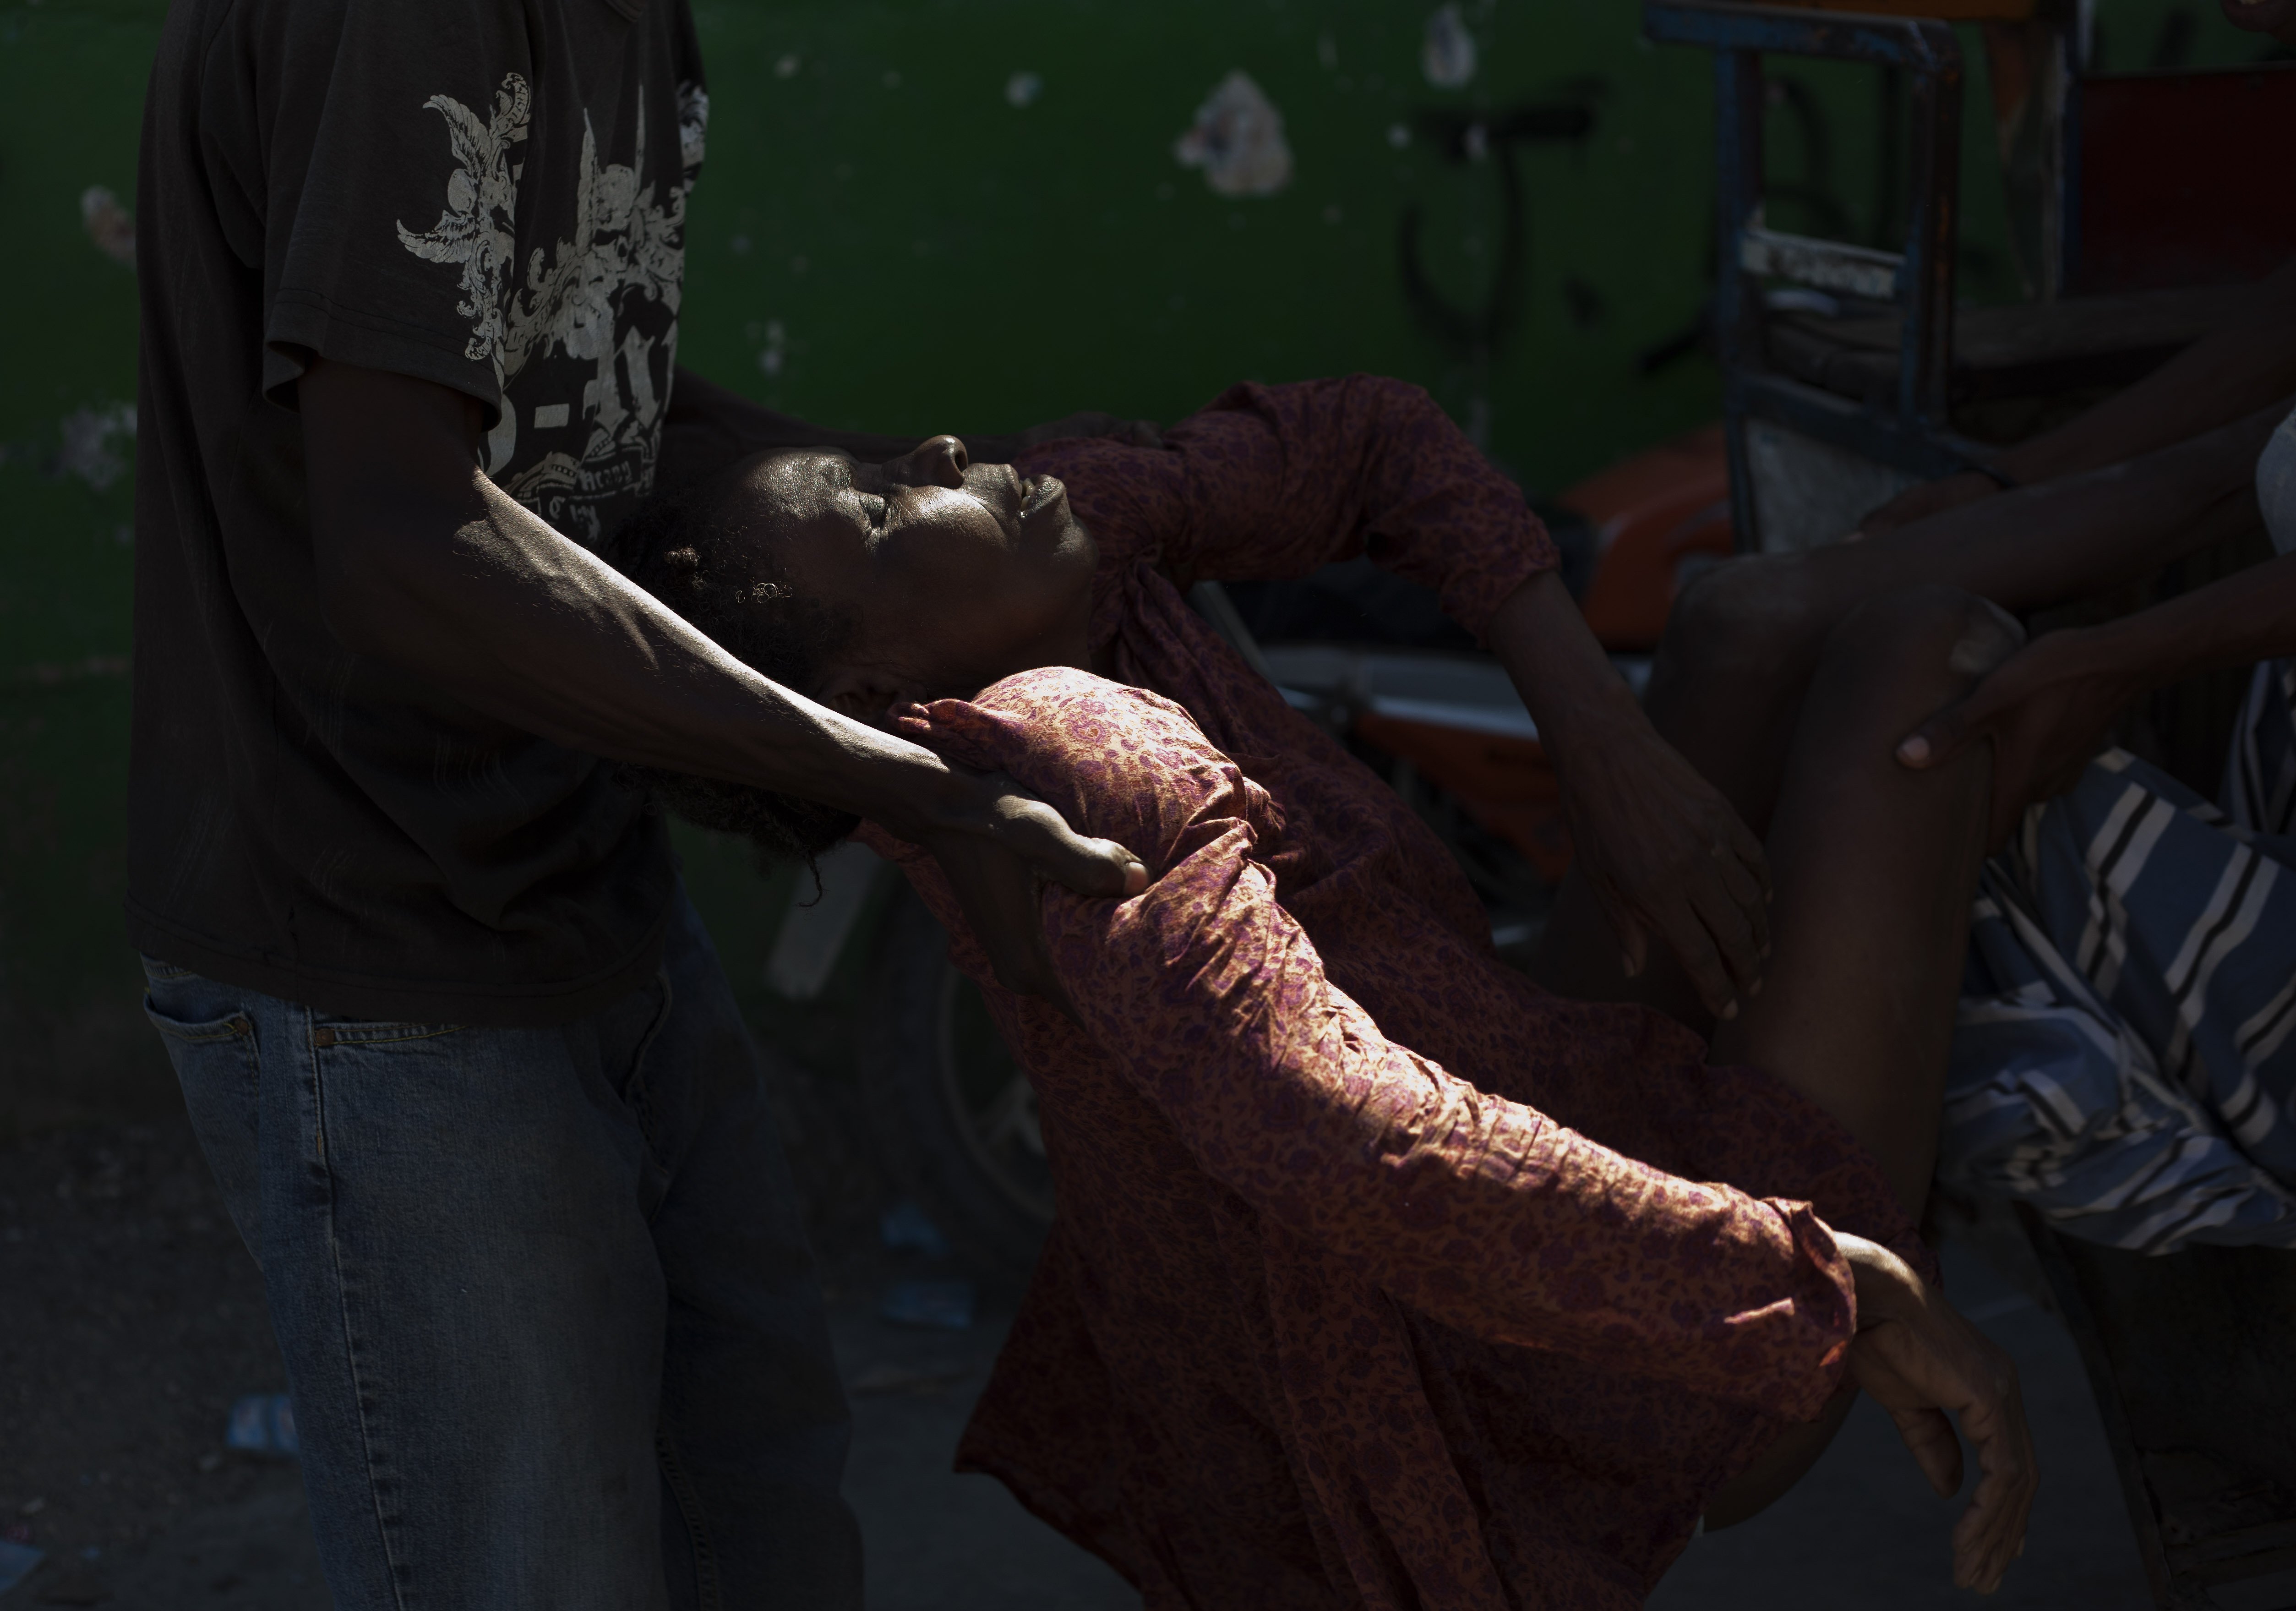 Port-au-Prince, Dödsfall, epidemi, Kolera, Katastrof, Brott och straff, Sjukdom, Haiti